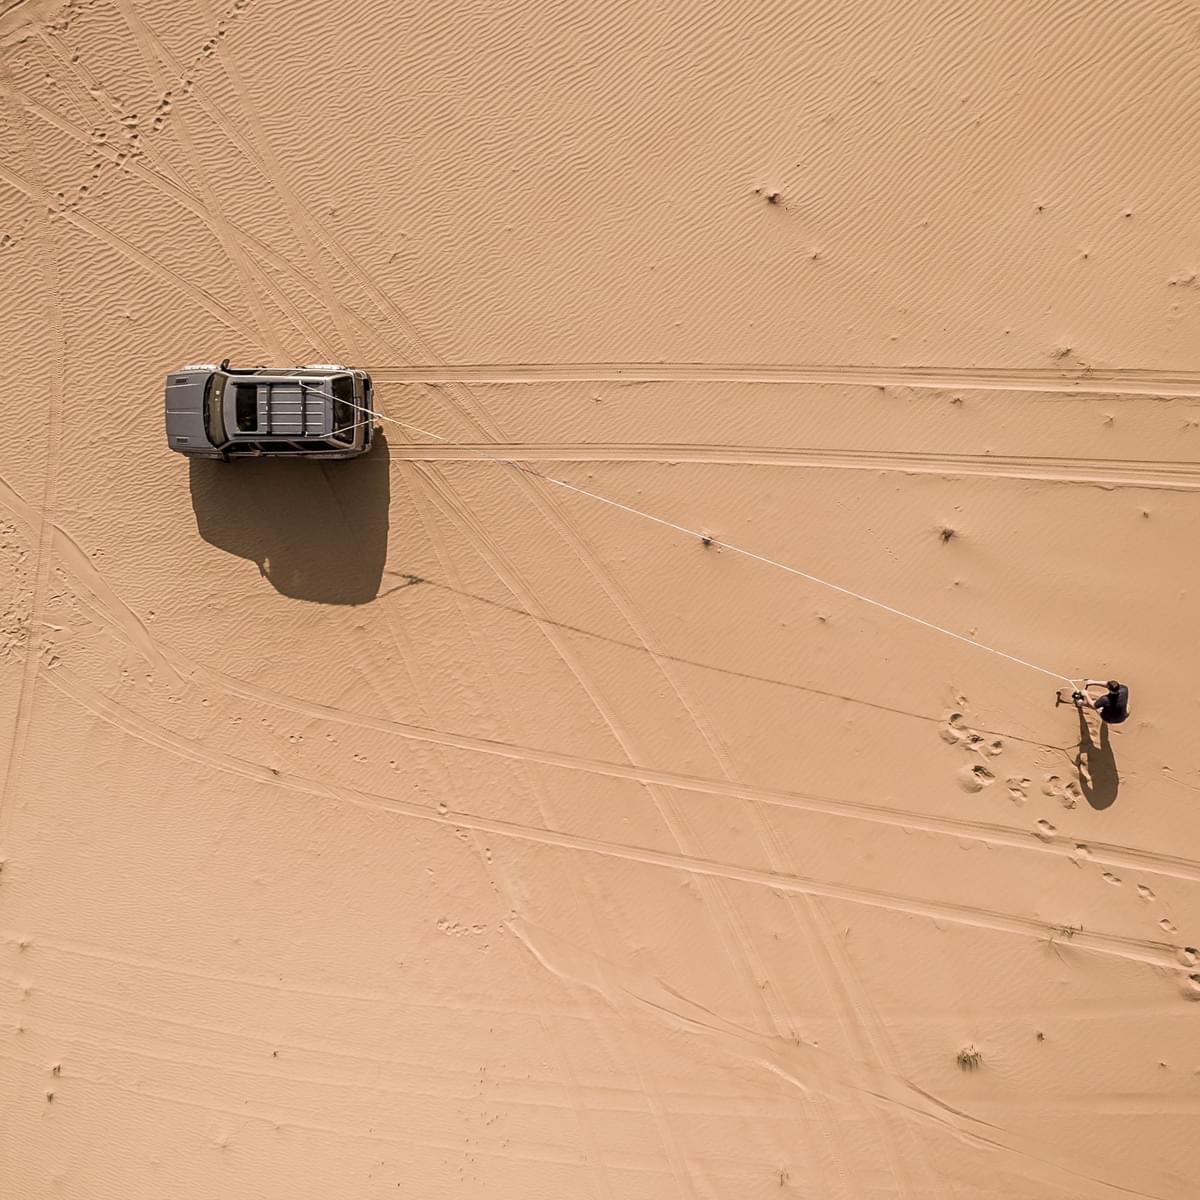 Try Dune Bashing